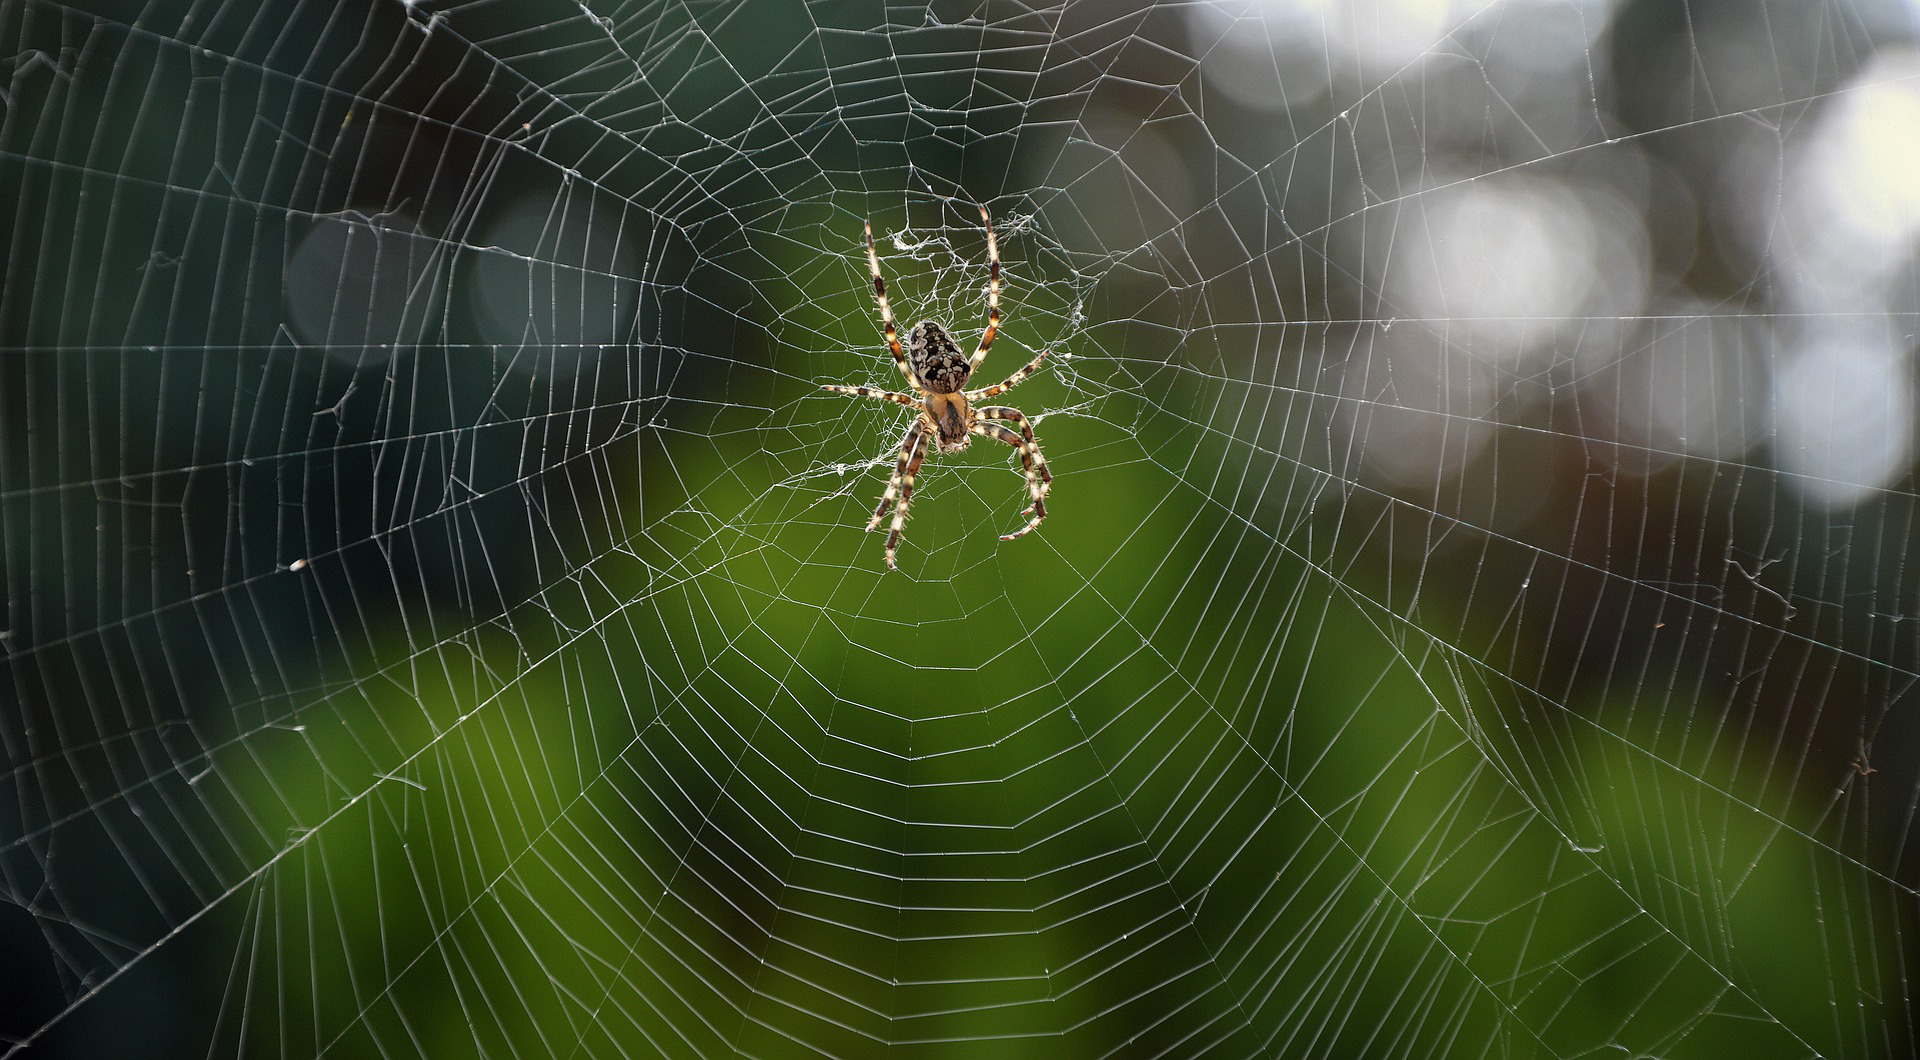 Australia in 'spider apocalypse' as huge webs spotted on roadside